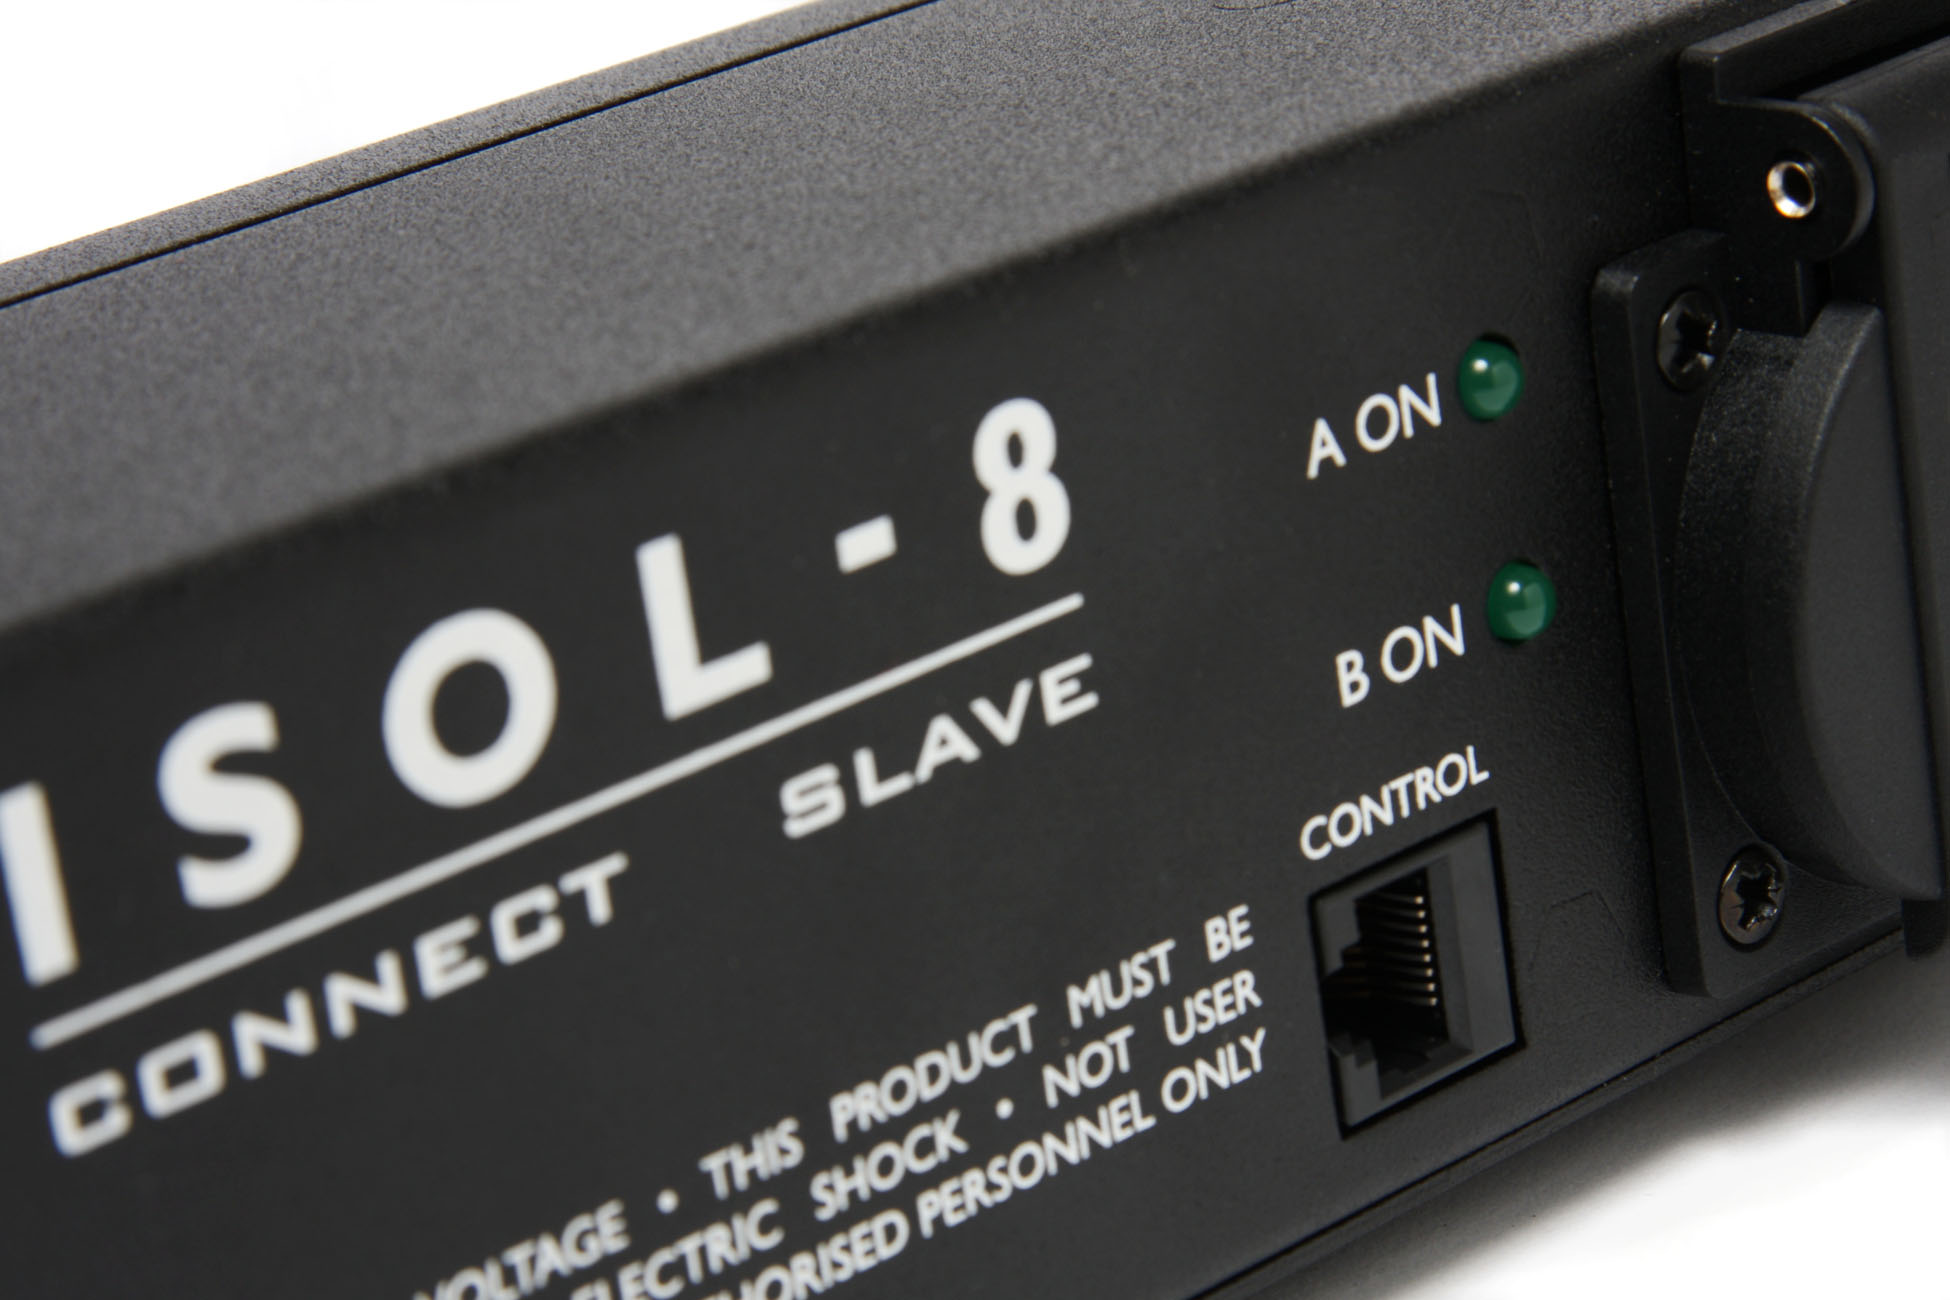 ISOL-8 Connect Slave Schuko